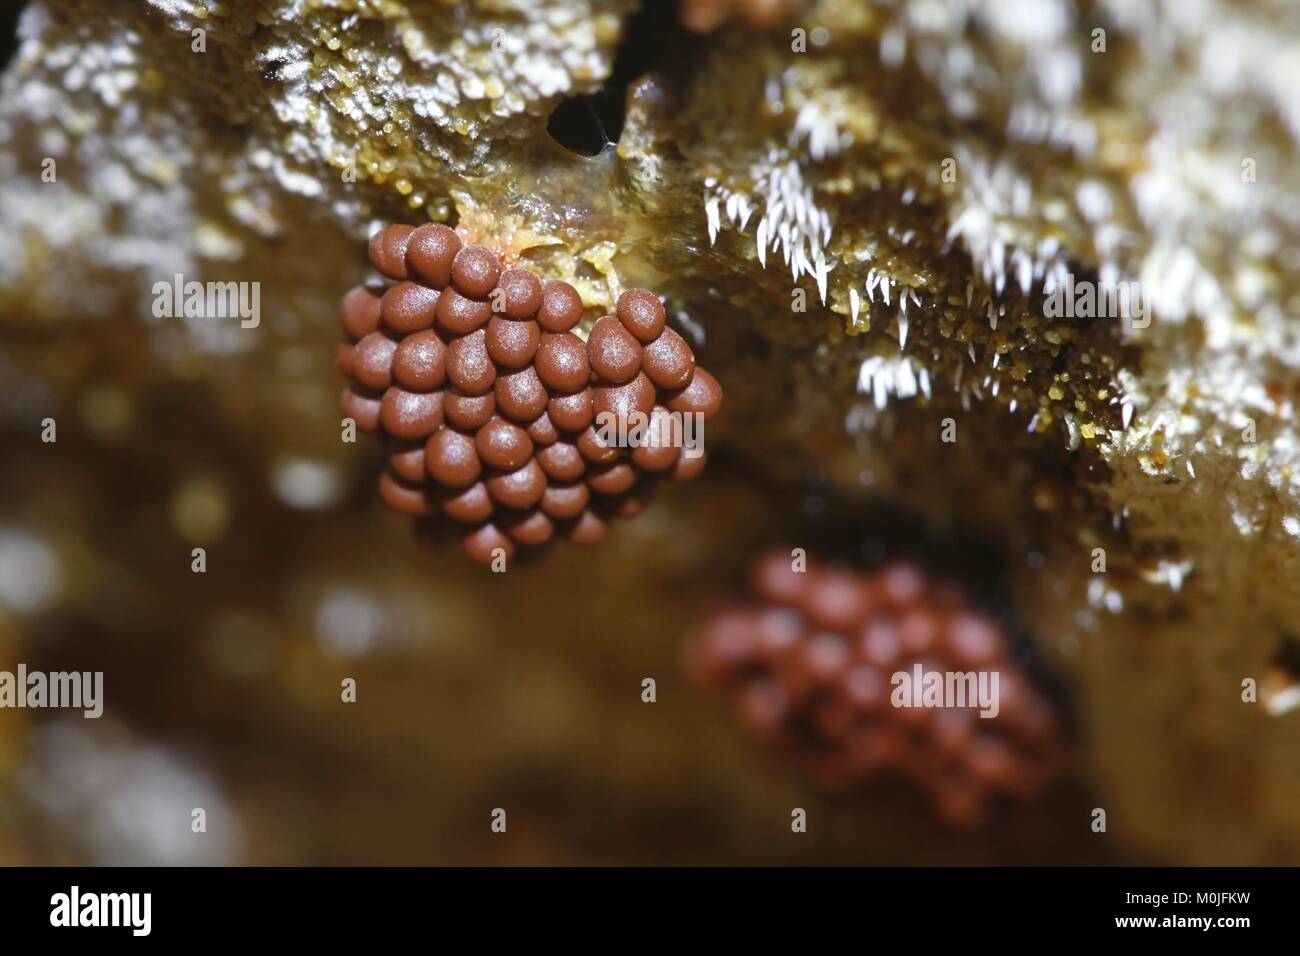 Wasp nest slime mold, Metatrichia vesparia Stock Photo